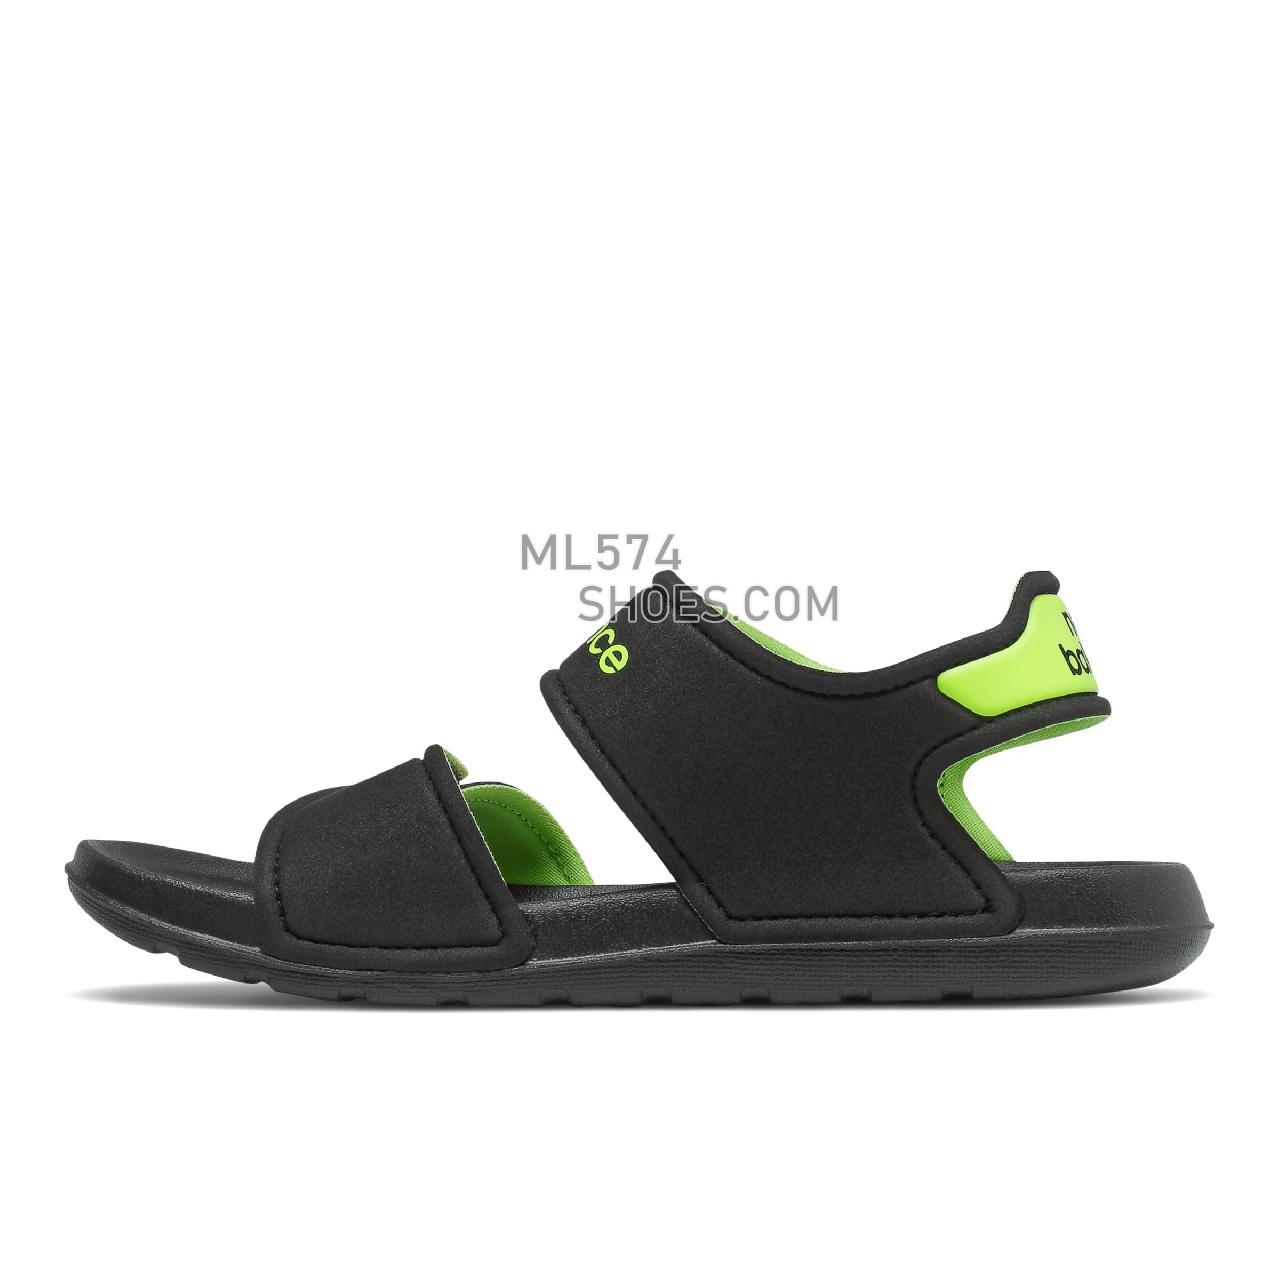 New Balance SPSD - Unisex Men's Women's Sandals - Black with Lime Glo - YOSPSDKL